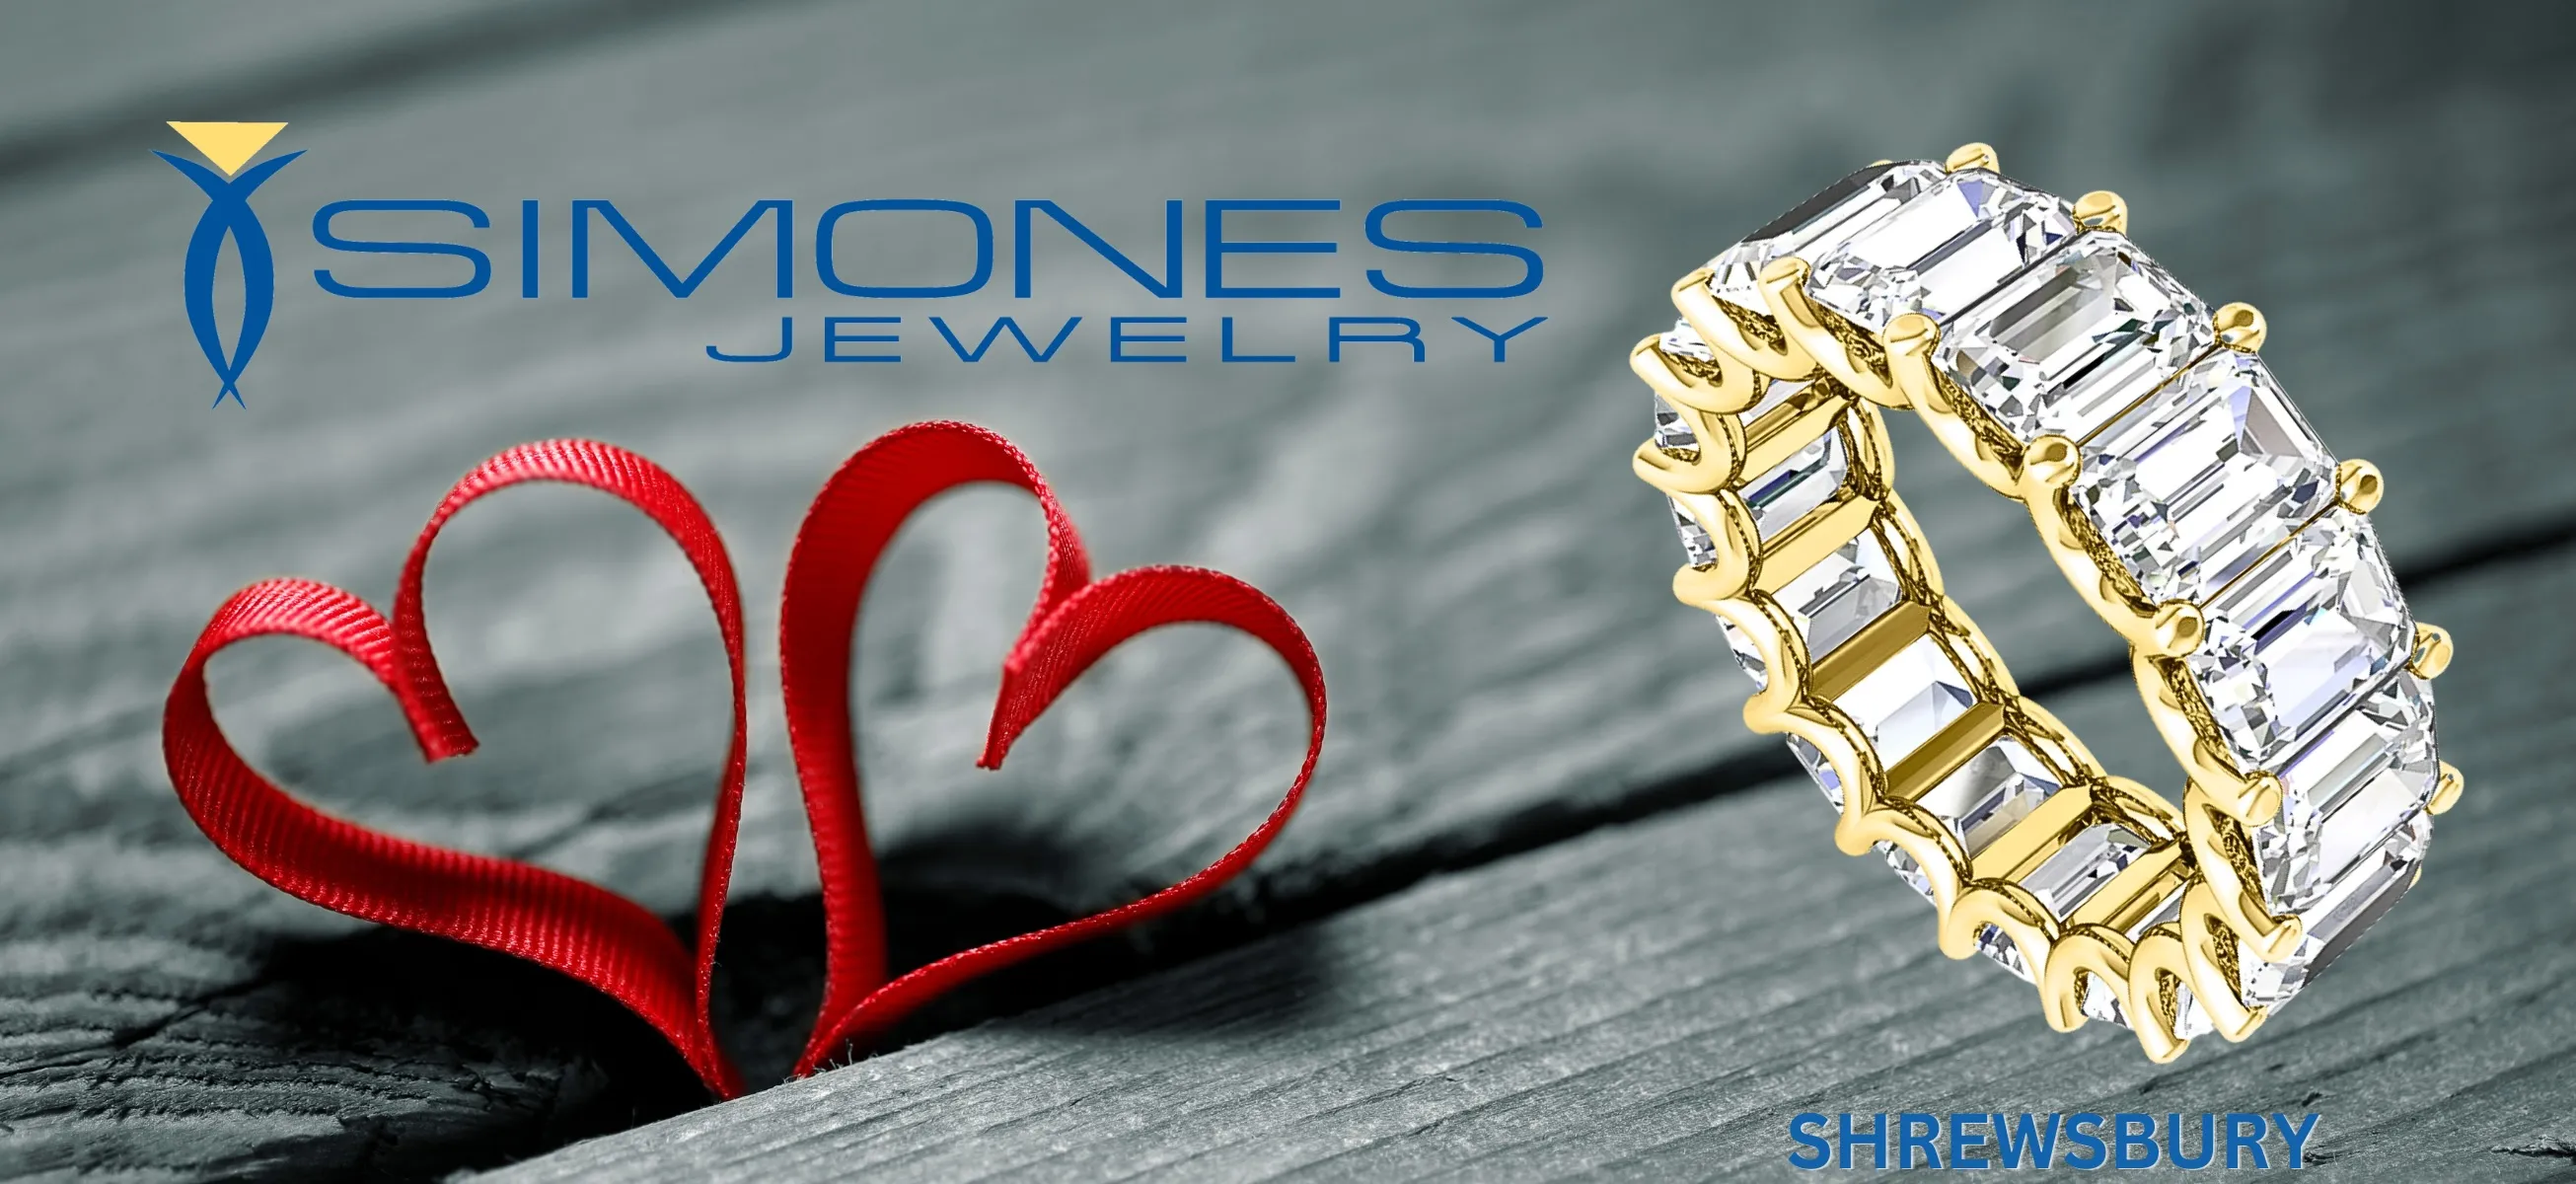 Big Headliner Placeholder Copy Text Here  Simones Jewelry, LLC Shrewsbury, NJ